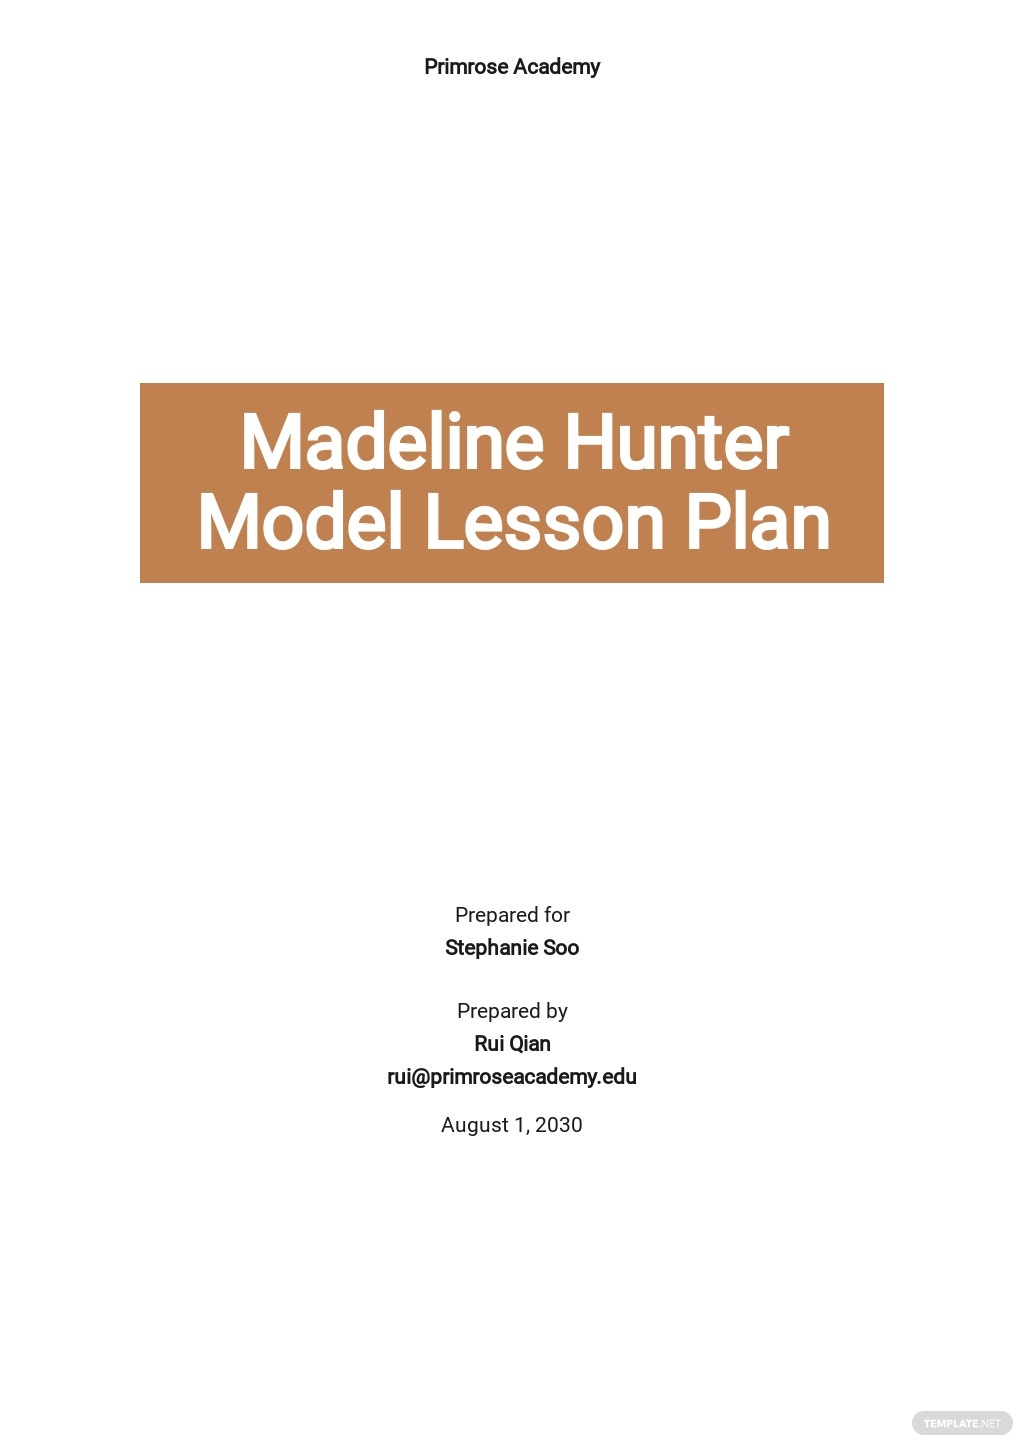 Madeline Hunter Model Lesson Plan Template - Google Docs, Word  Intended For Madeline Hunter Lesson Plan Blank Template